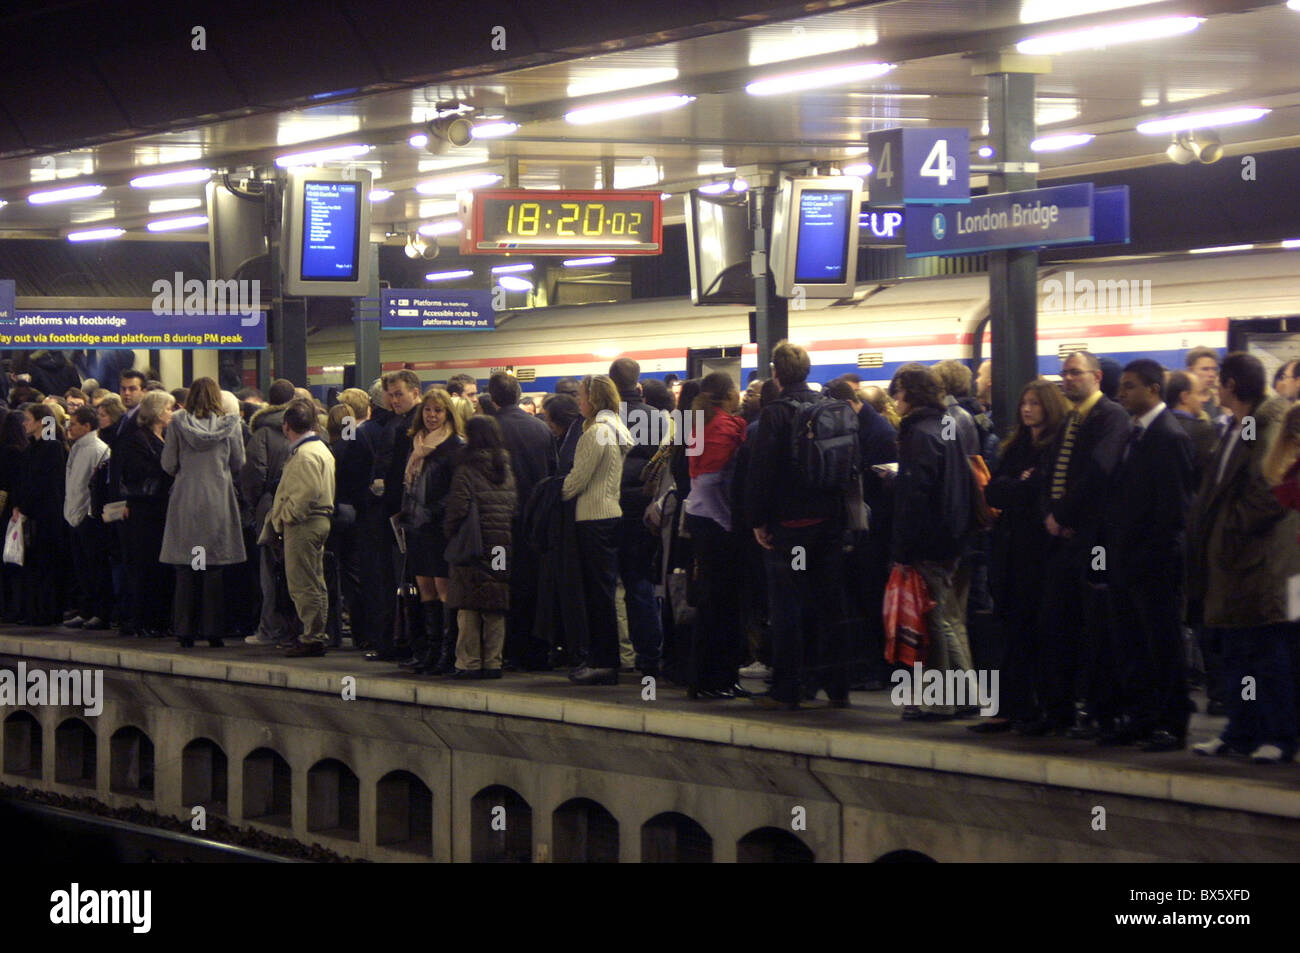 crowded train platform at London Bridge with people waiting Stock Photo